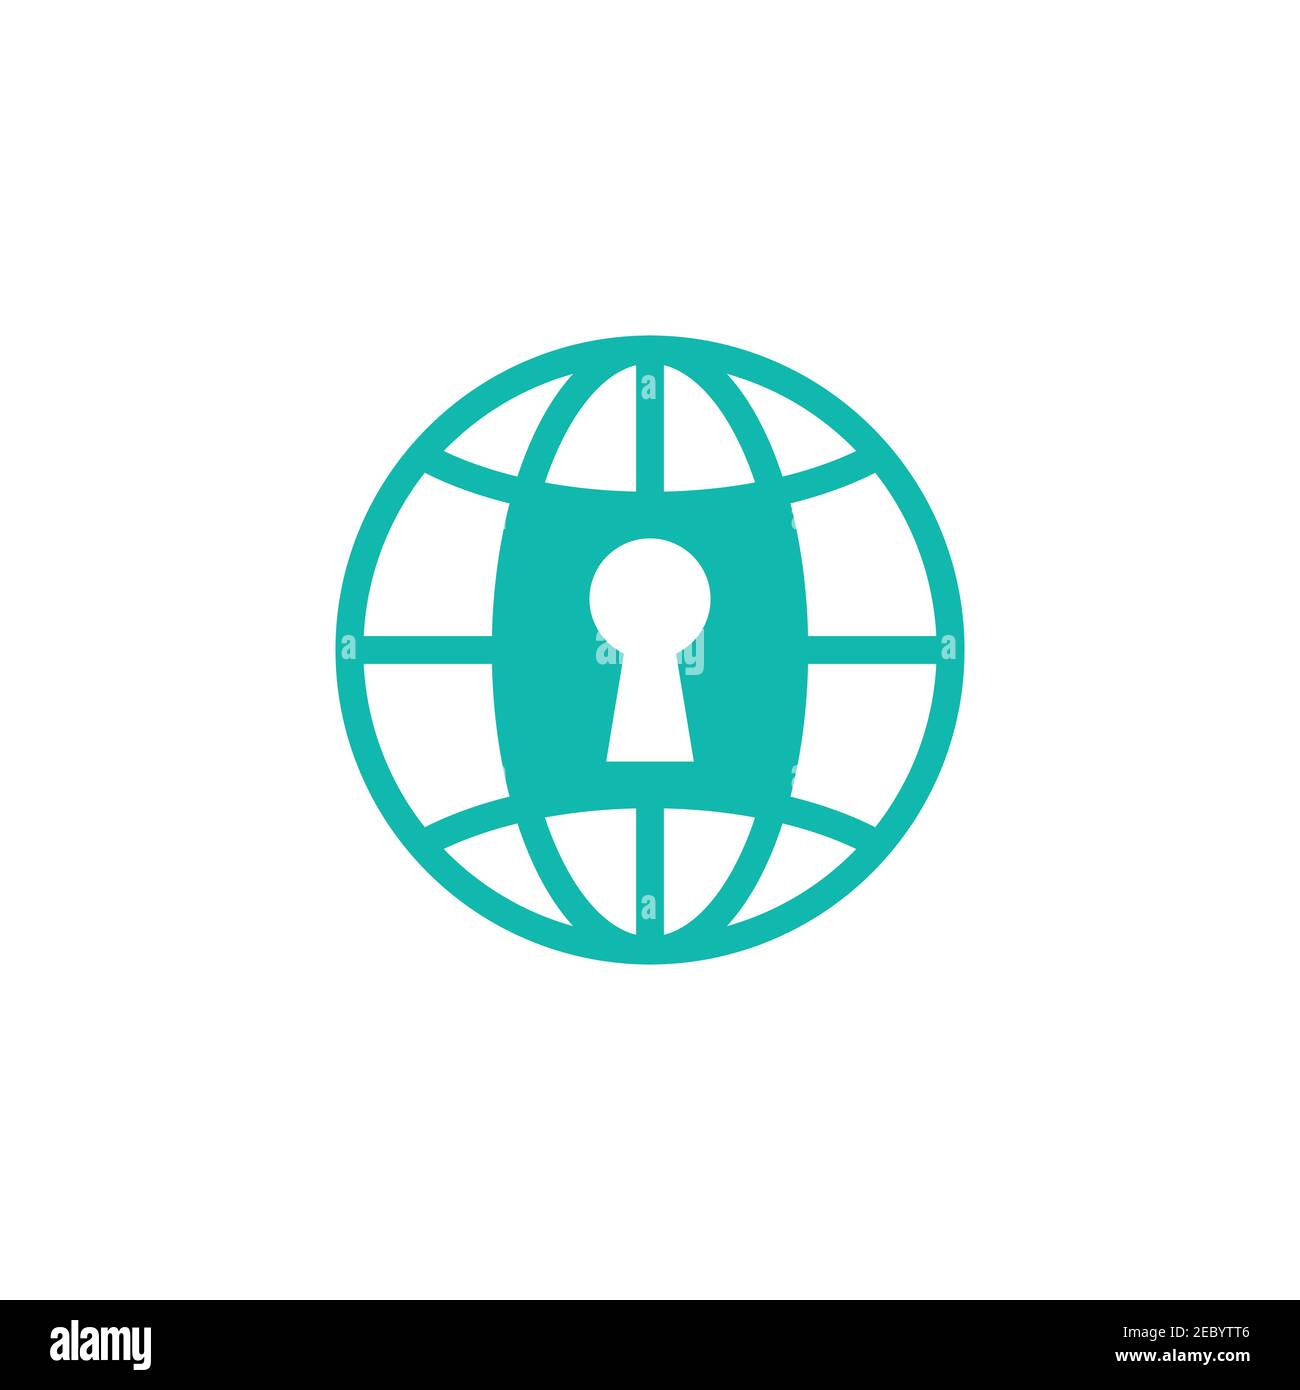 Erdschutz Sicherheit Logo Design Illustration Symbol Vektor Vorlage Stock Vektor